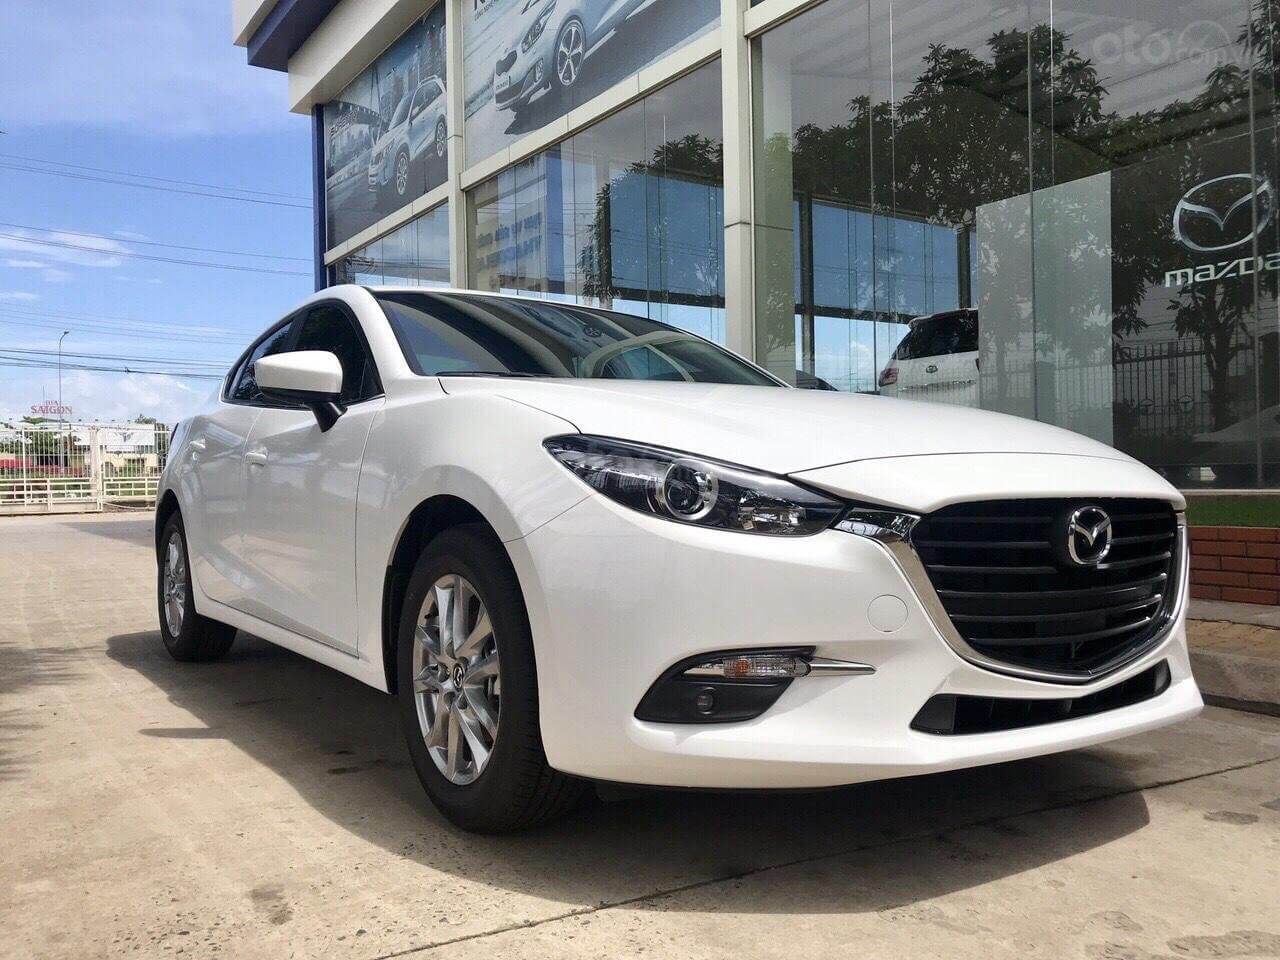 Mazda Quảng Nam